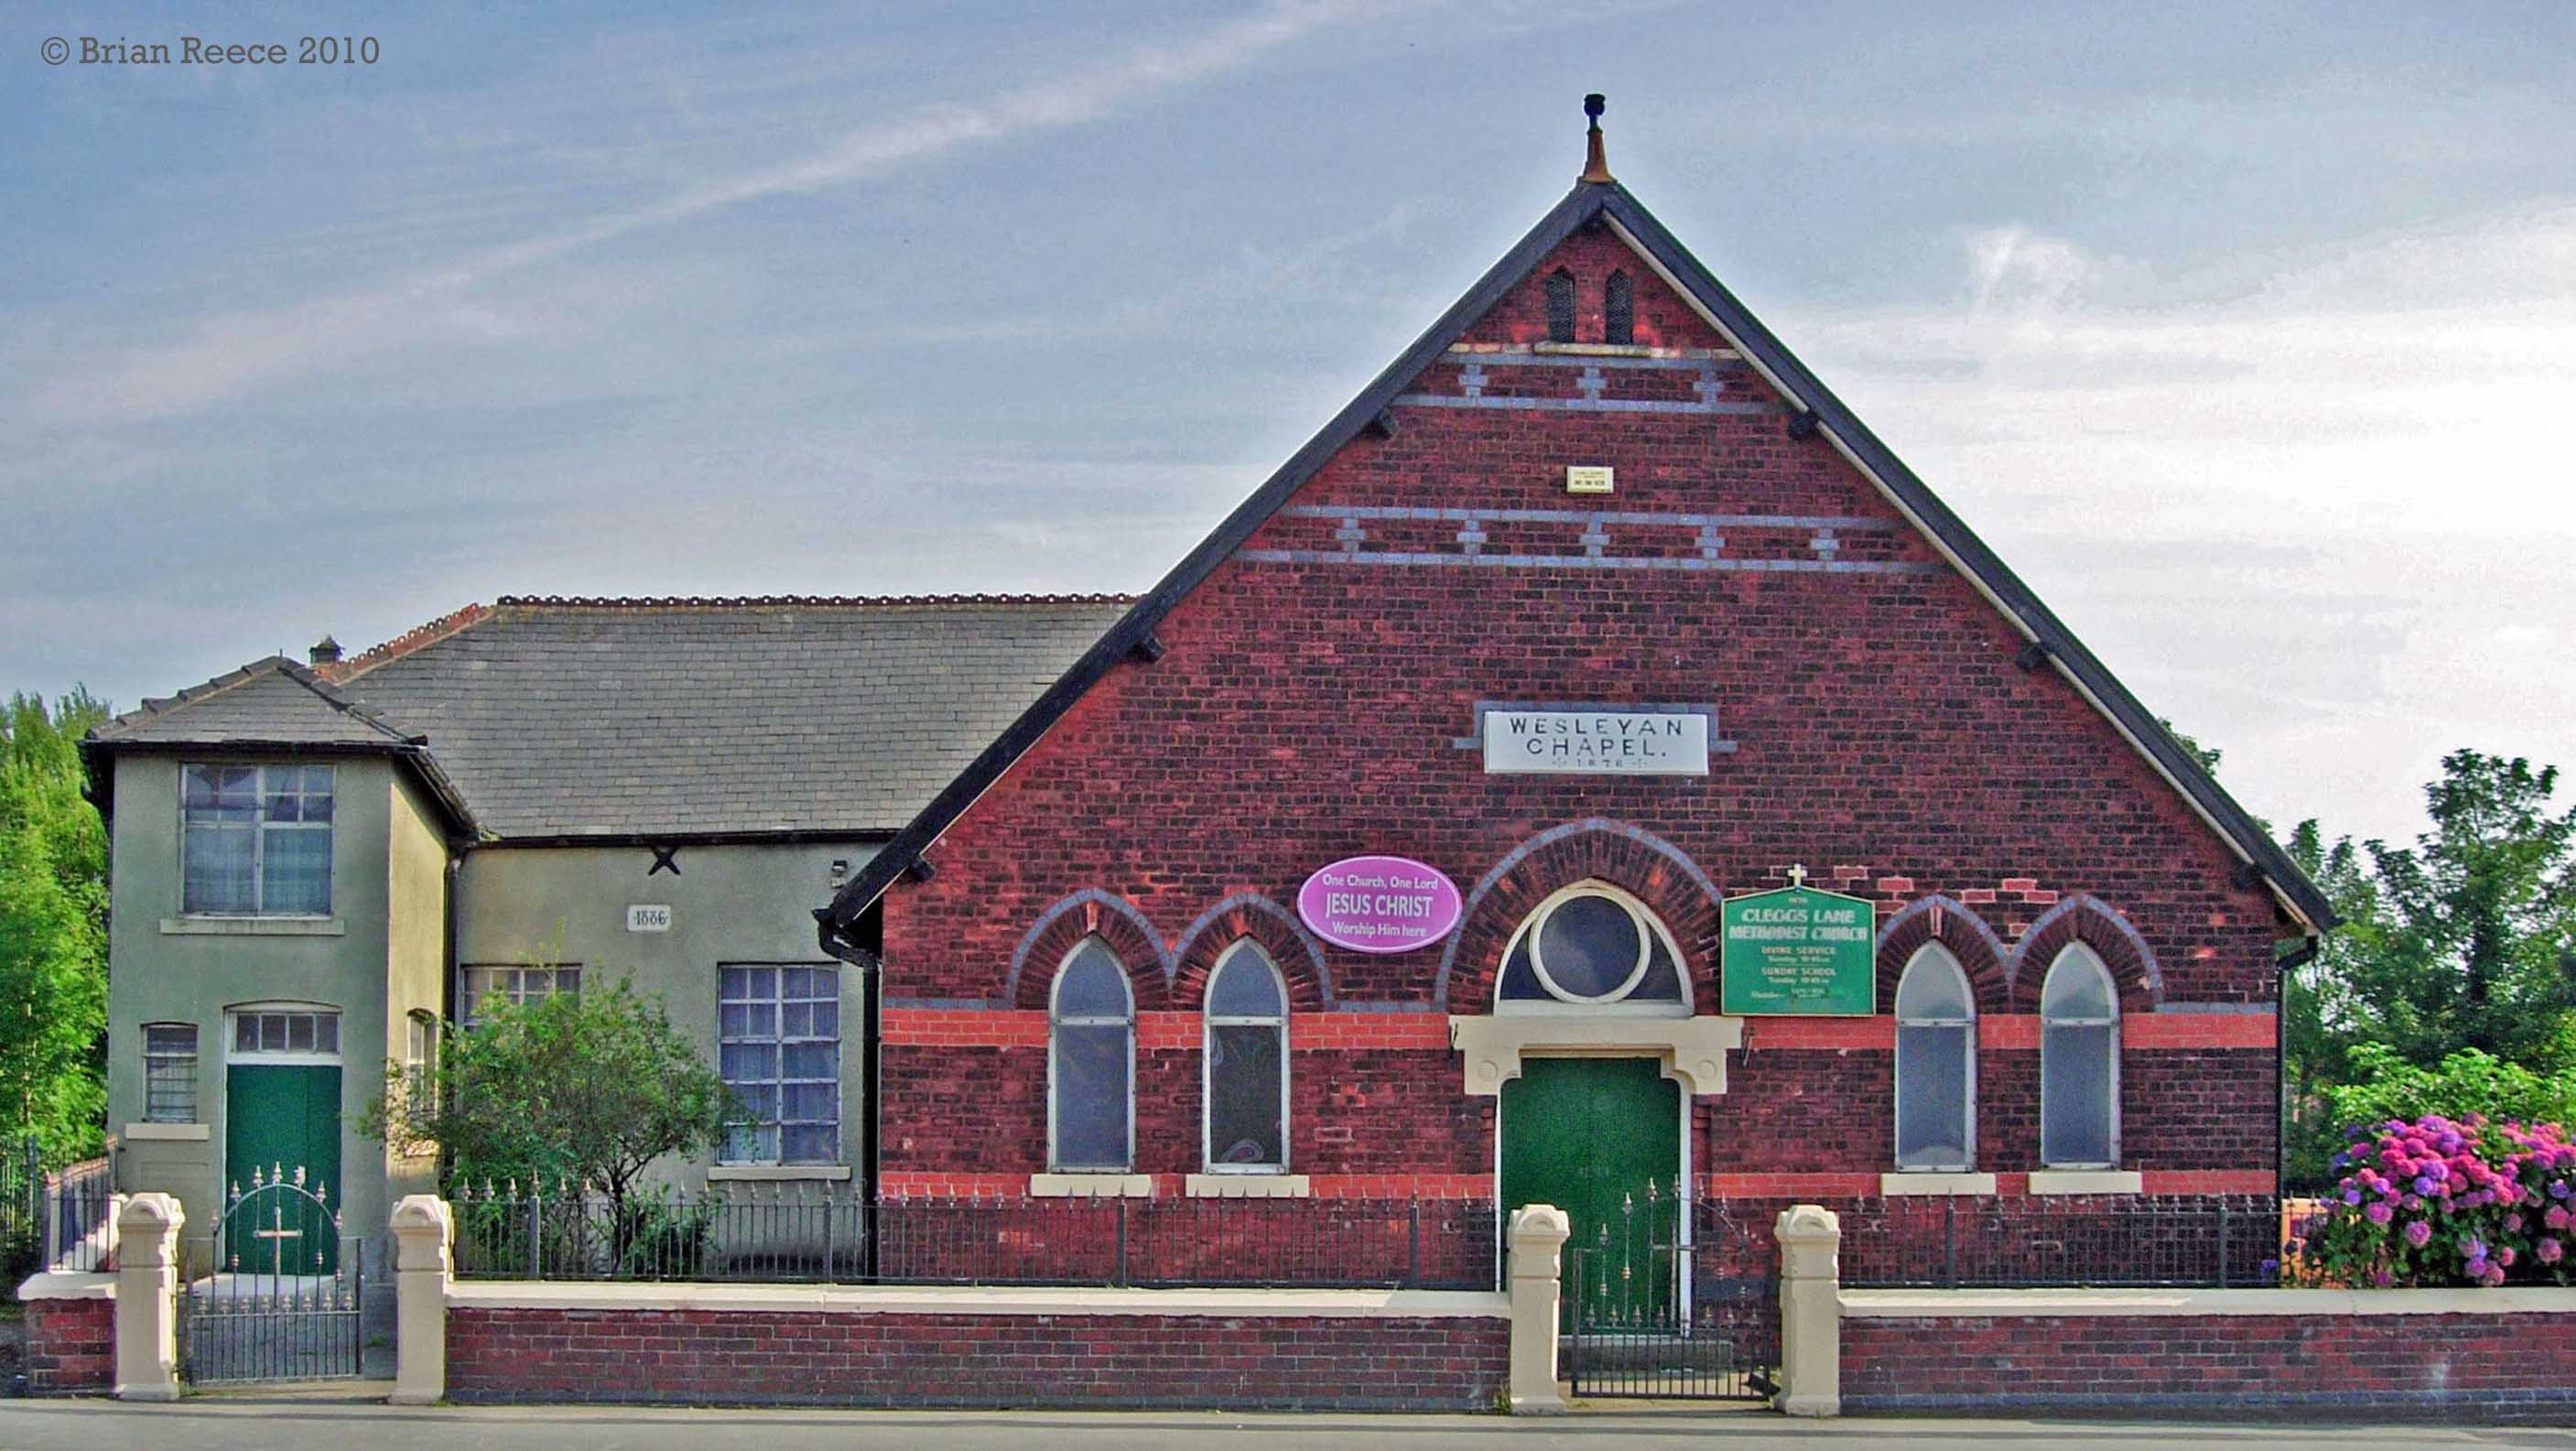 Cleggs Lane Methodist Church, Little Hulton